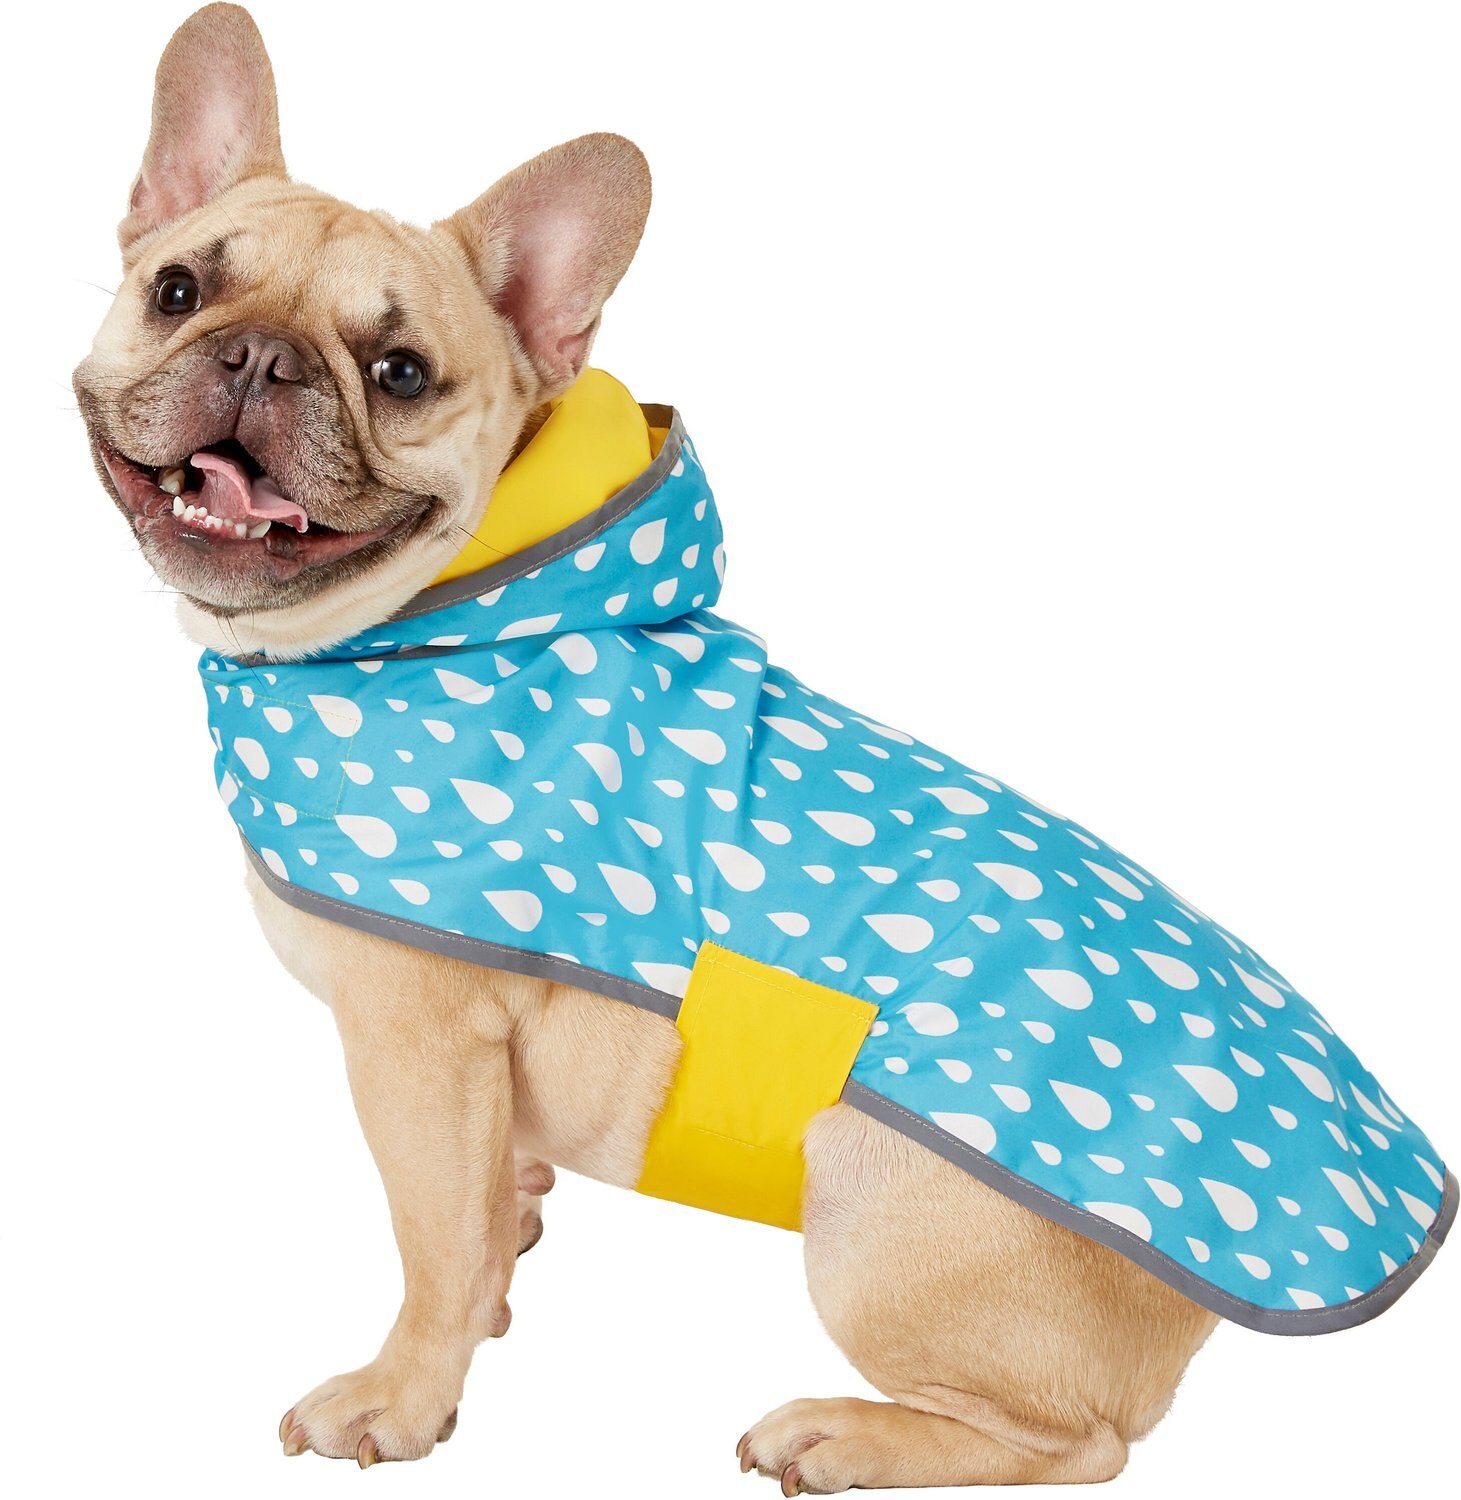 Frisco Reversible Packable Travel Dog Raincoat, Medium - Chewy.com